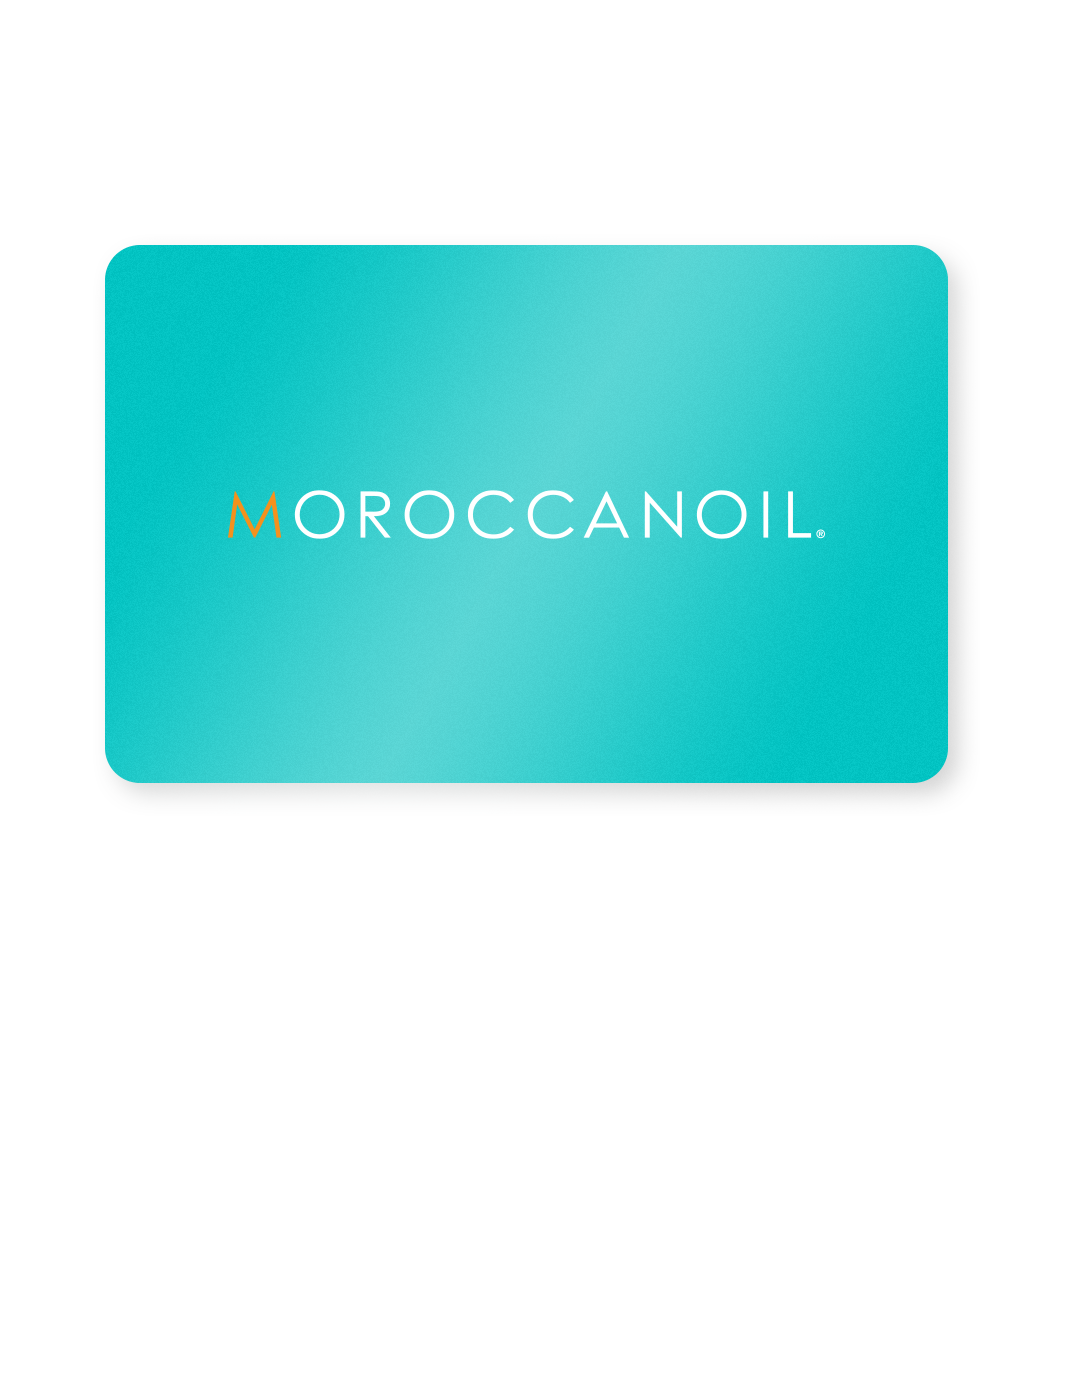 Moroccanoil Gift Card